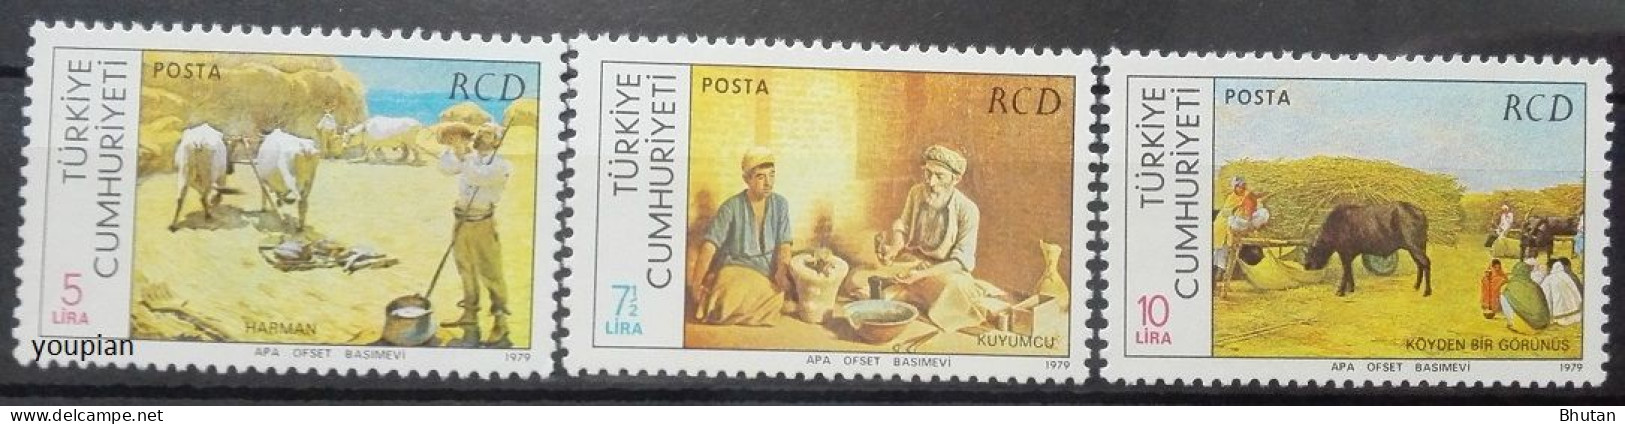 Türkiye 1979, RCD - Paintings From Türkiye, Iran And Pakistan, MNH Stamps Set - Unused Stamps